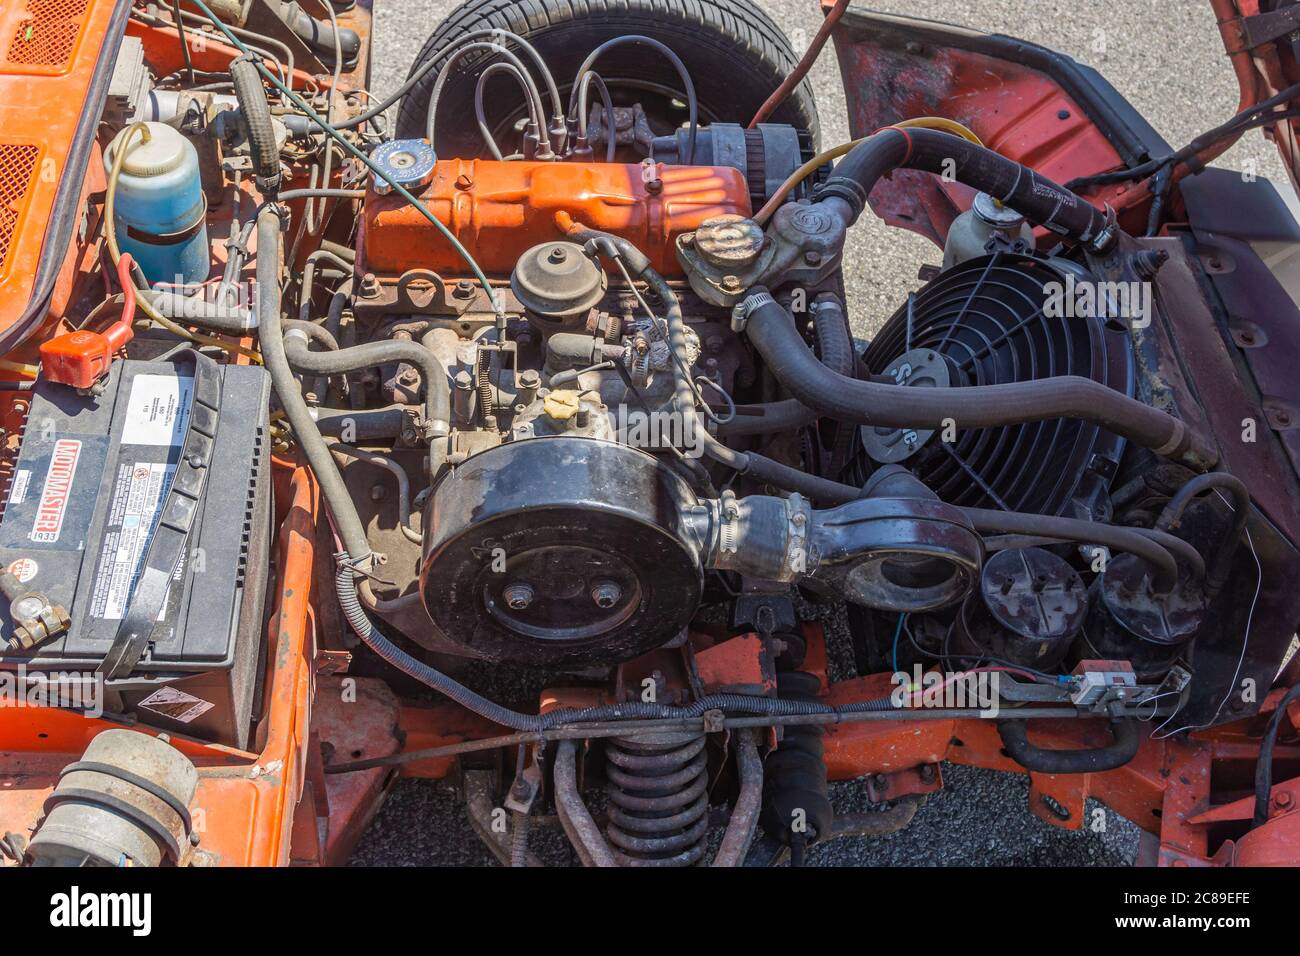 Toronto, Canada, July 2020 - Motor engine of a Triumph Spitfire vintage car Stock Photo